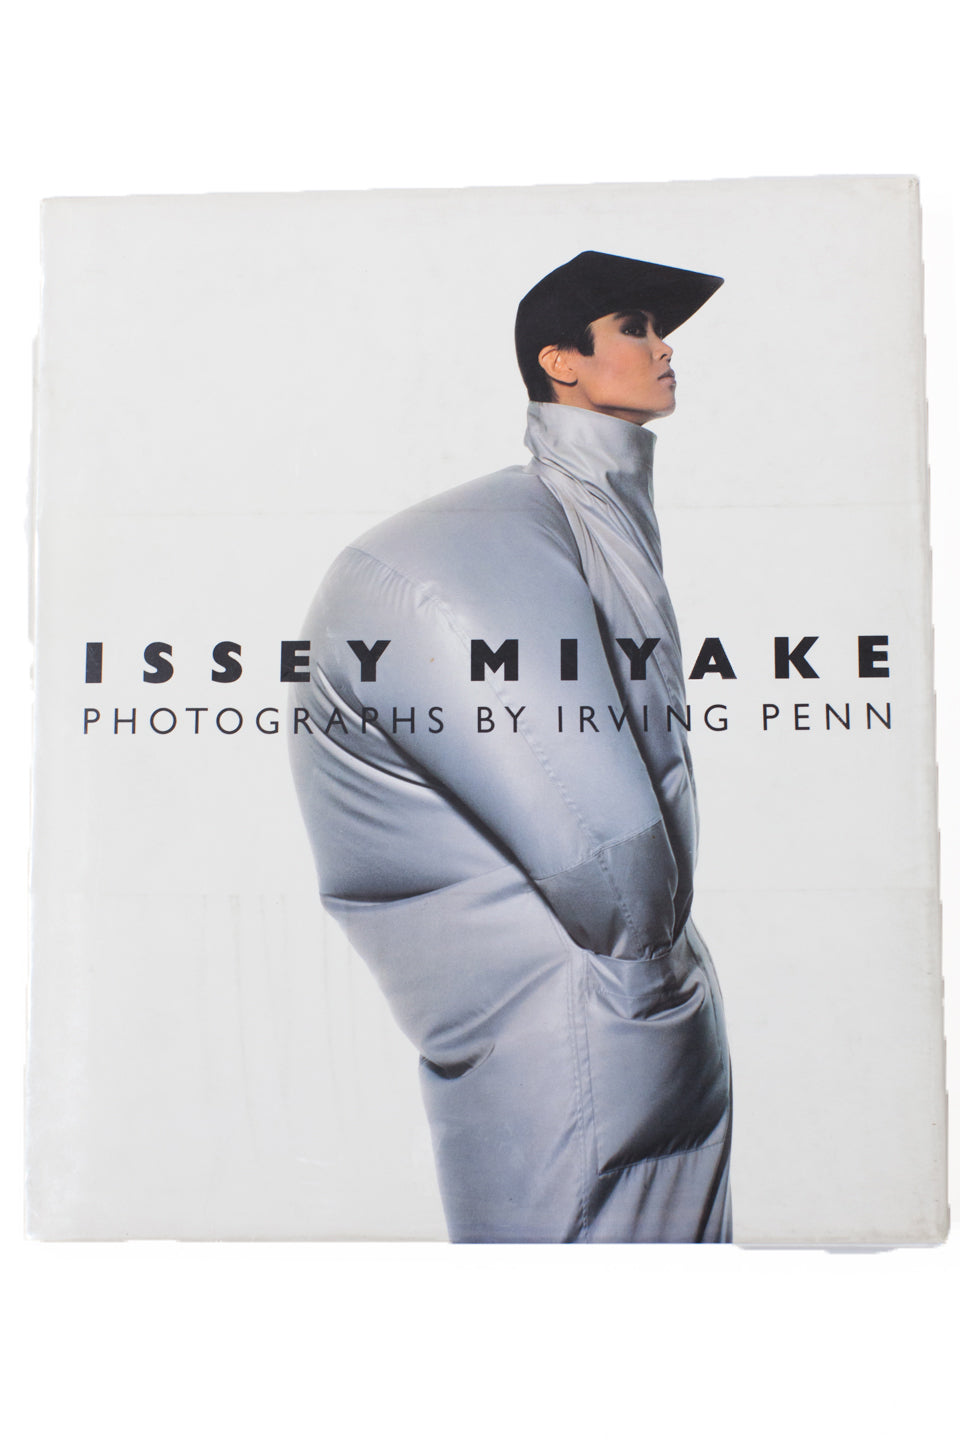 ISSEY MIYAKE | Photographs by Irving Penn